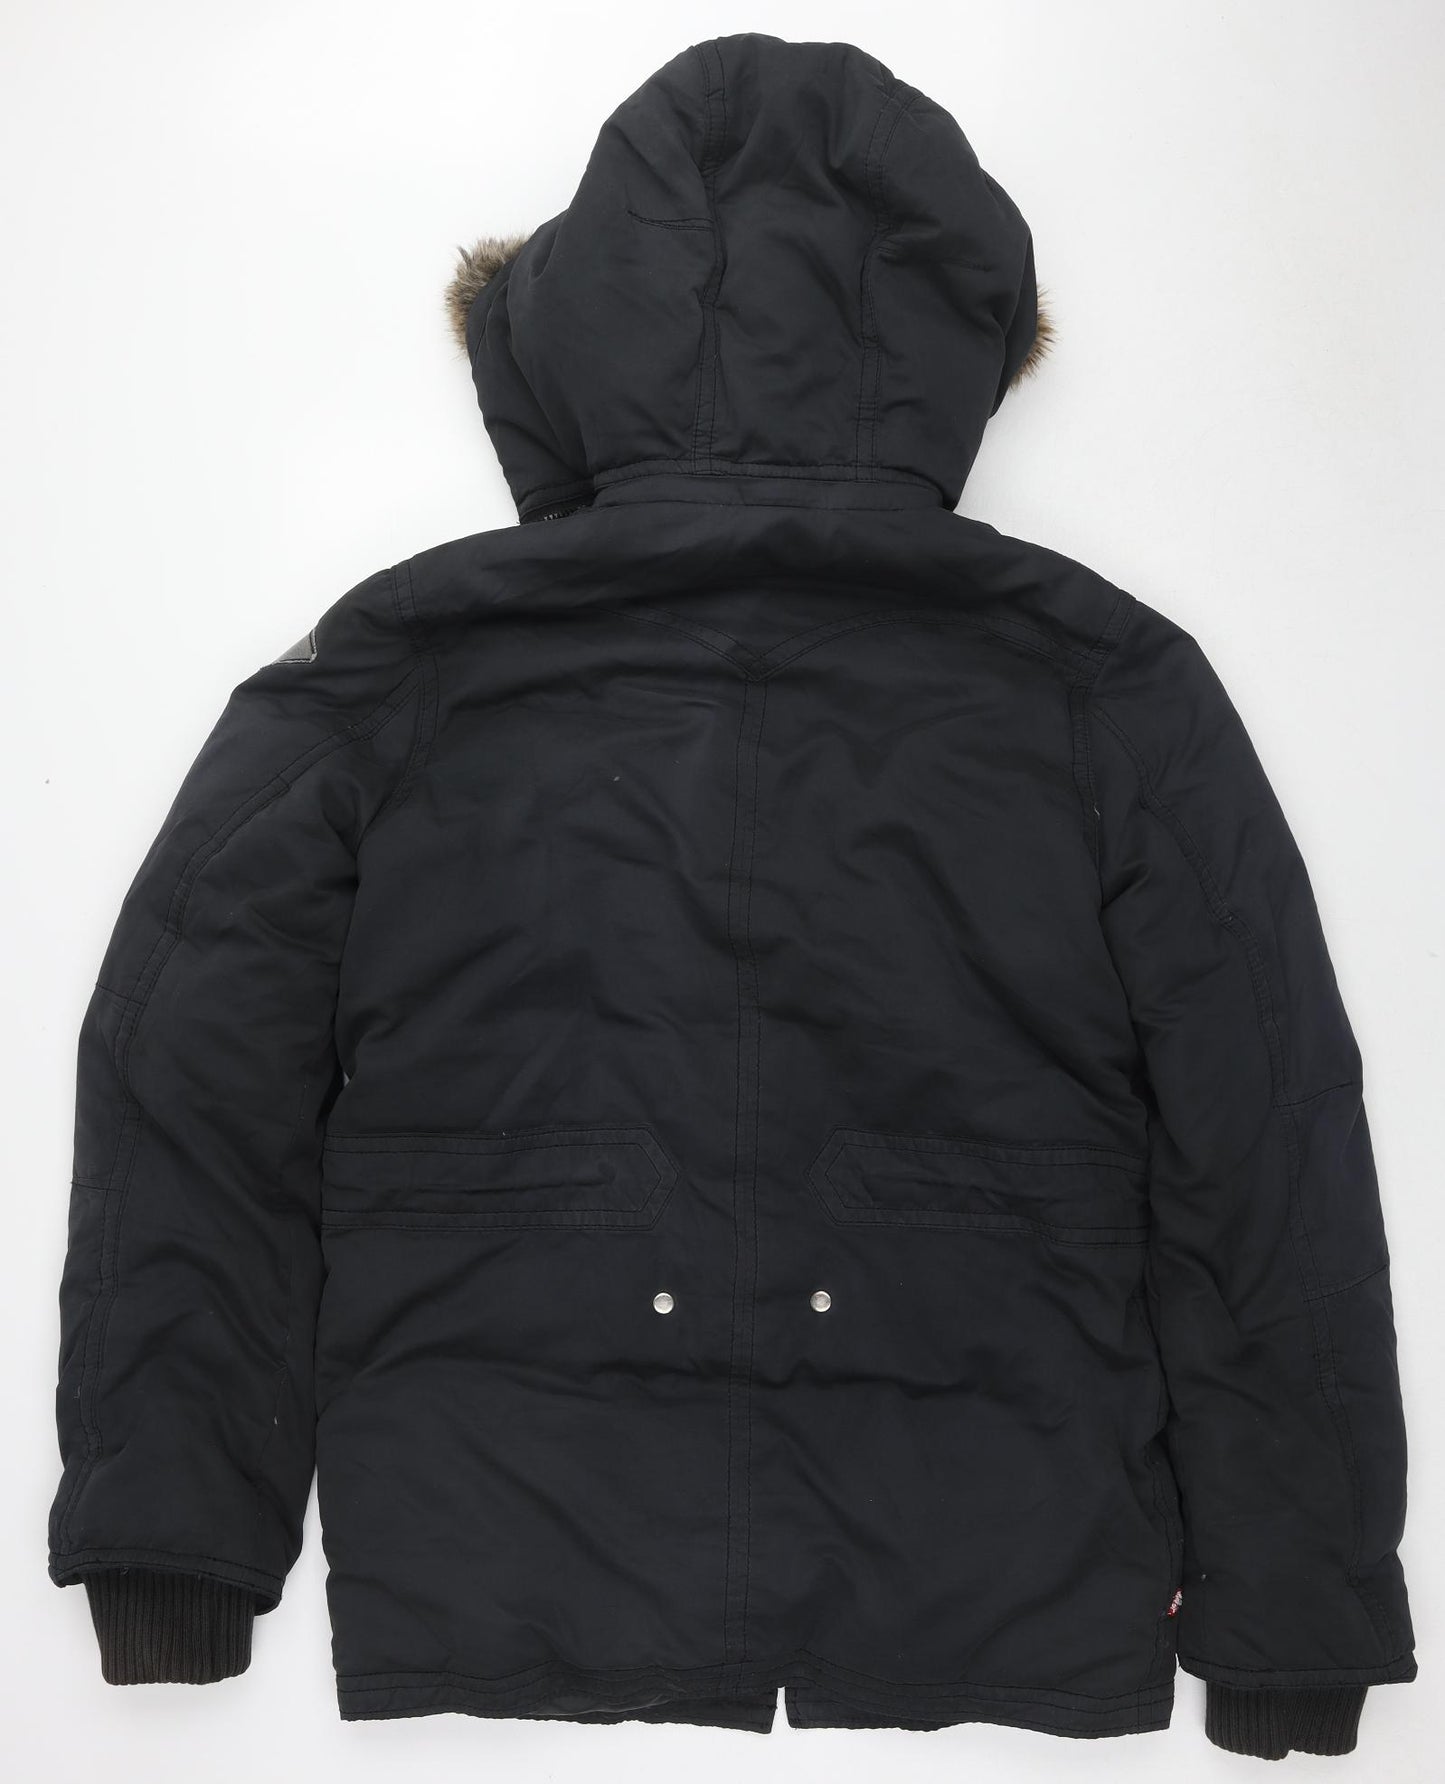 Levi's Womens Black Puffer Jacket Jacket Size M Zip